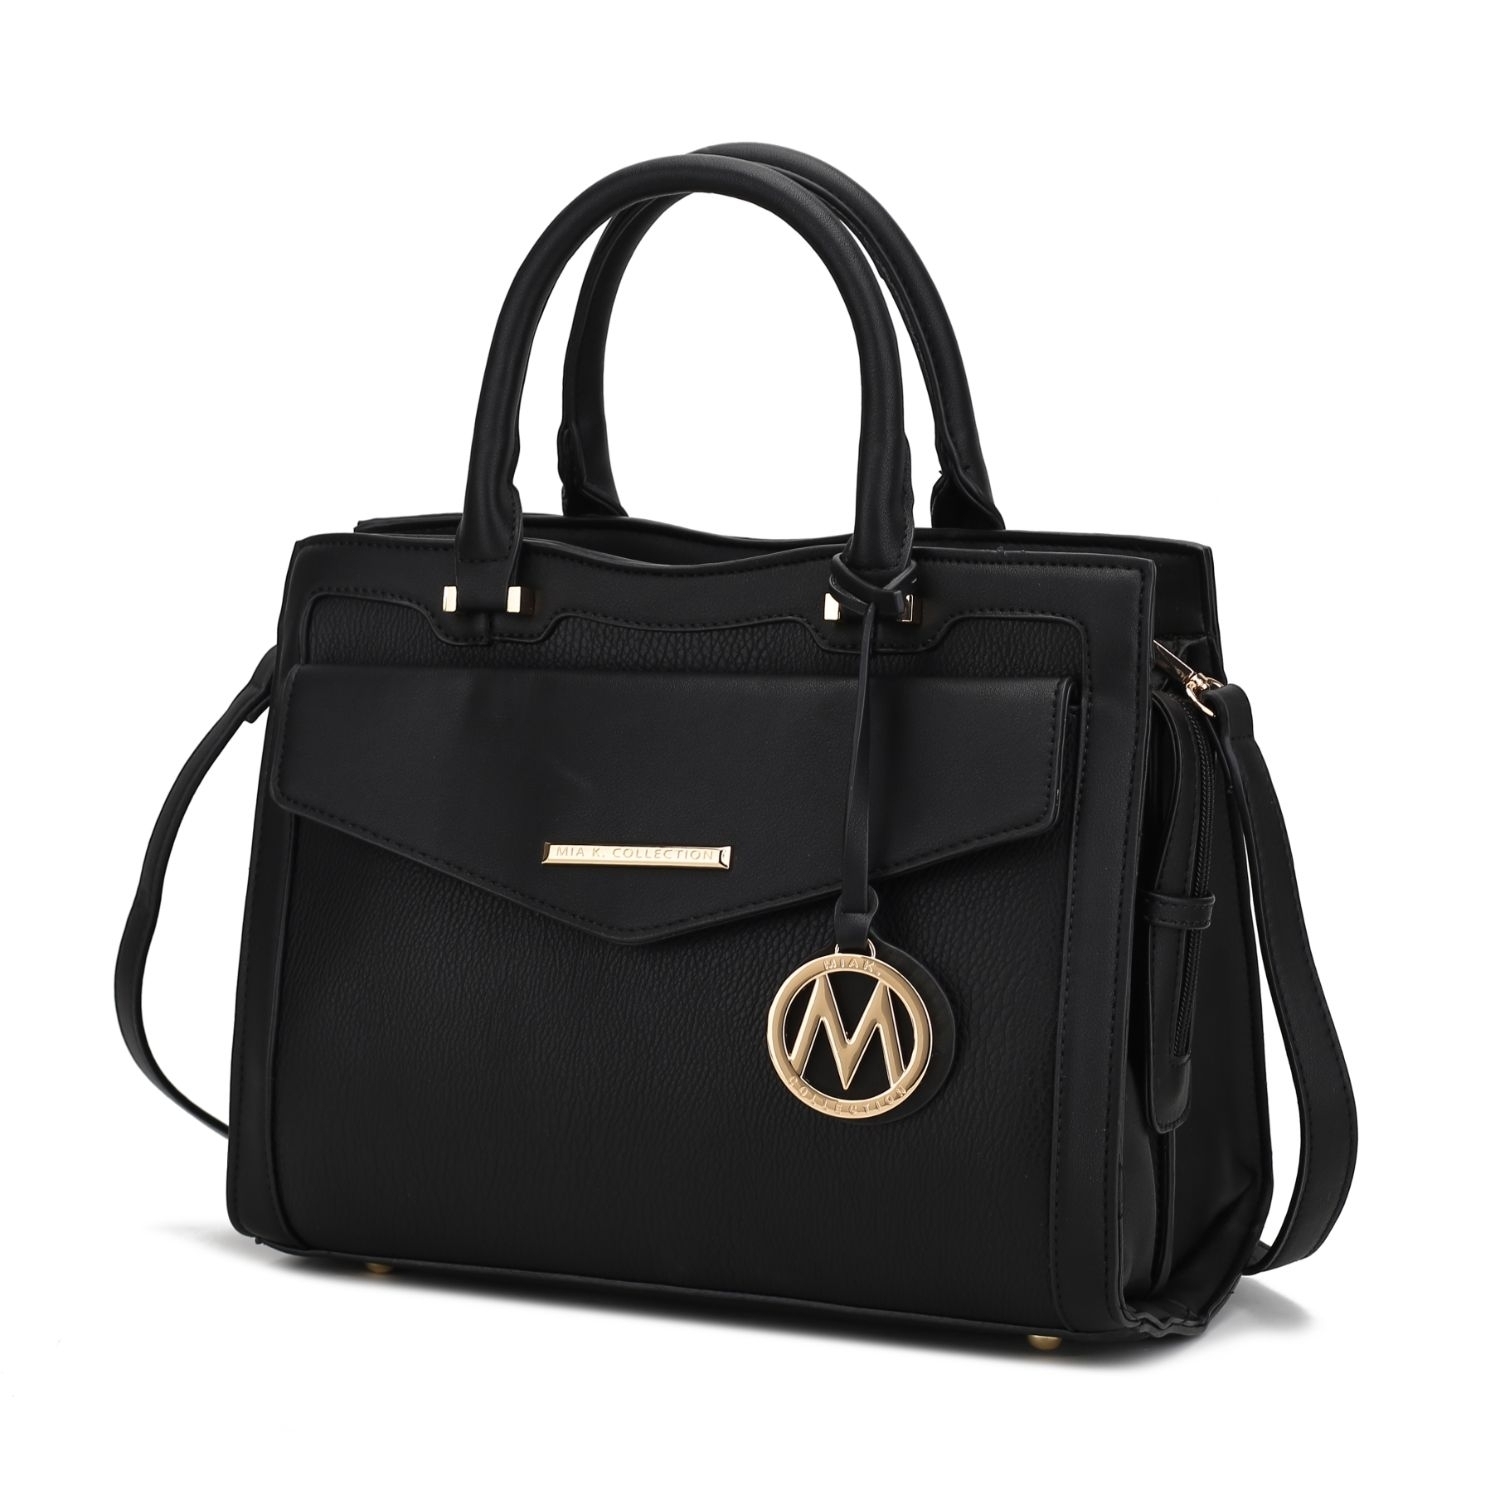 MKF Collection Alyssa Satchel Handbag By Mia K. - Charcoal